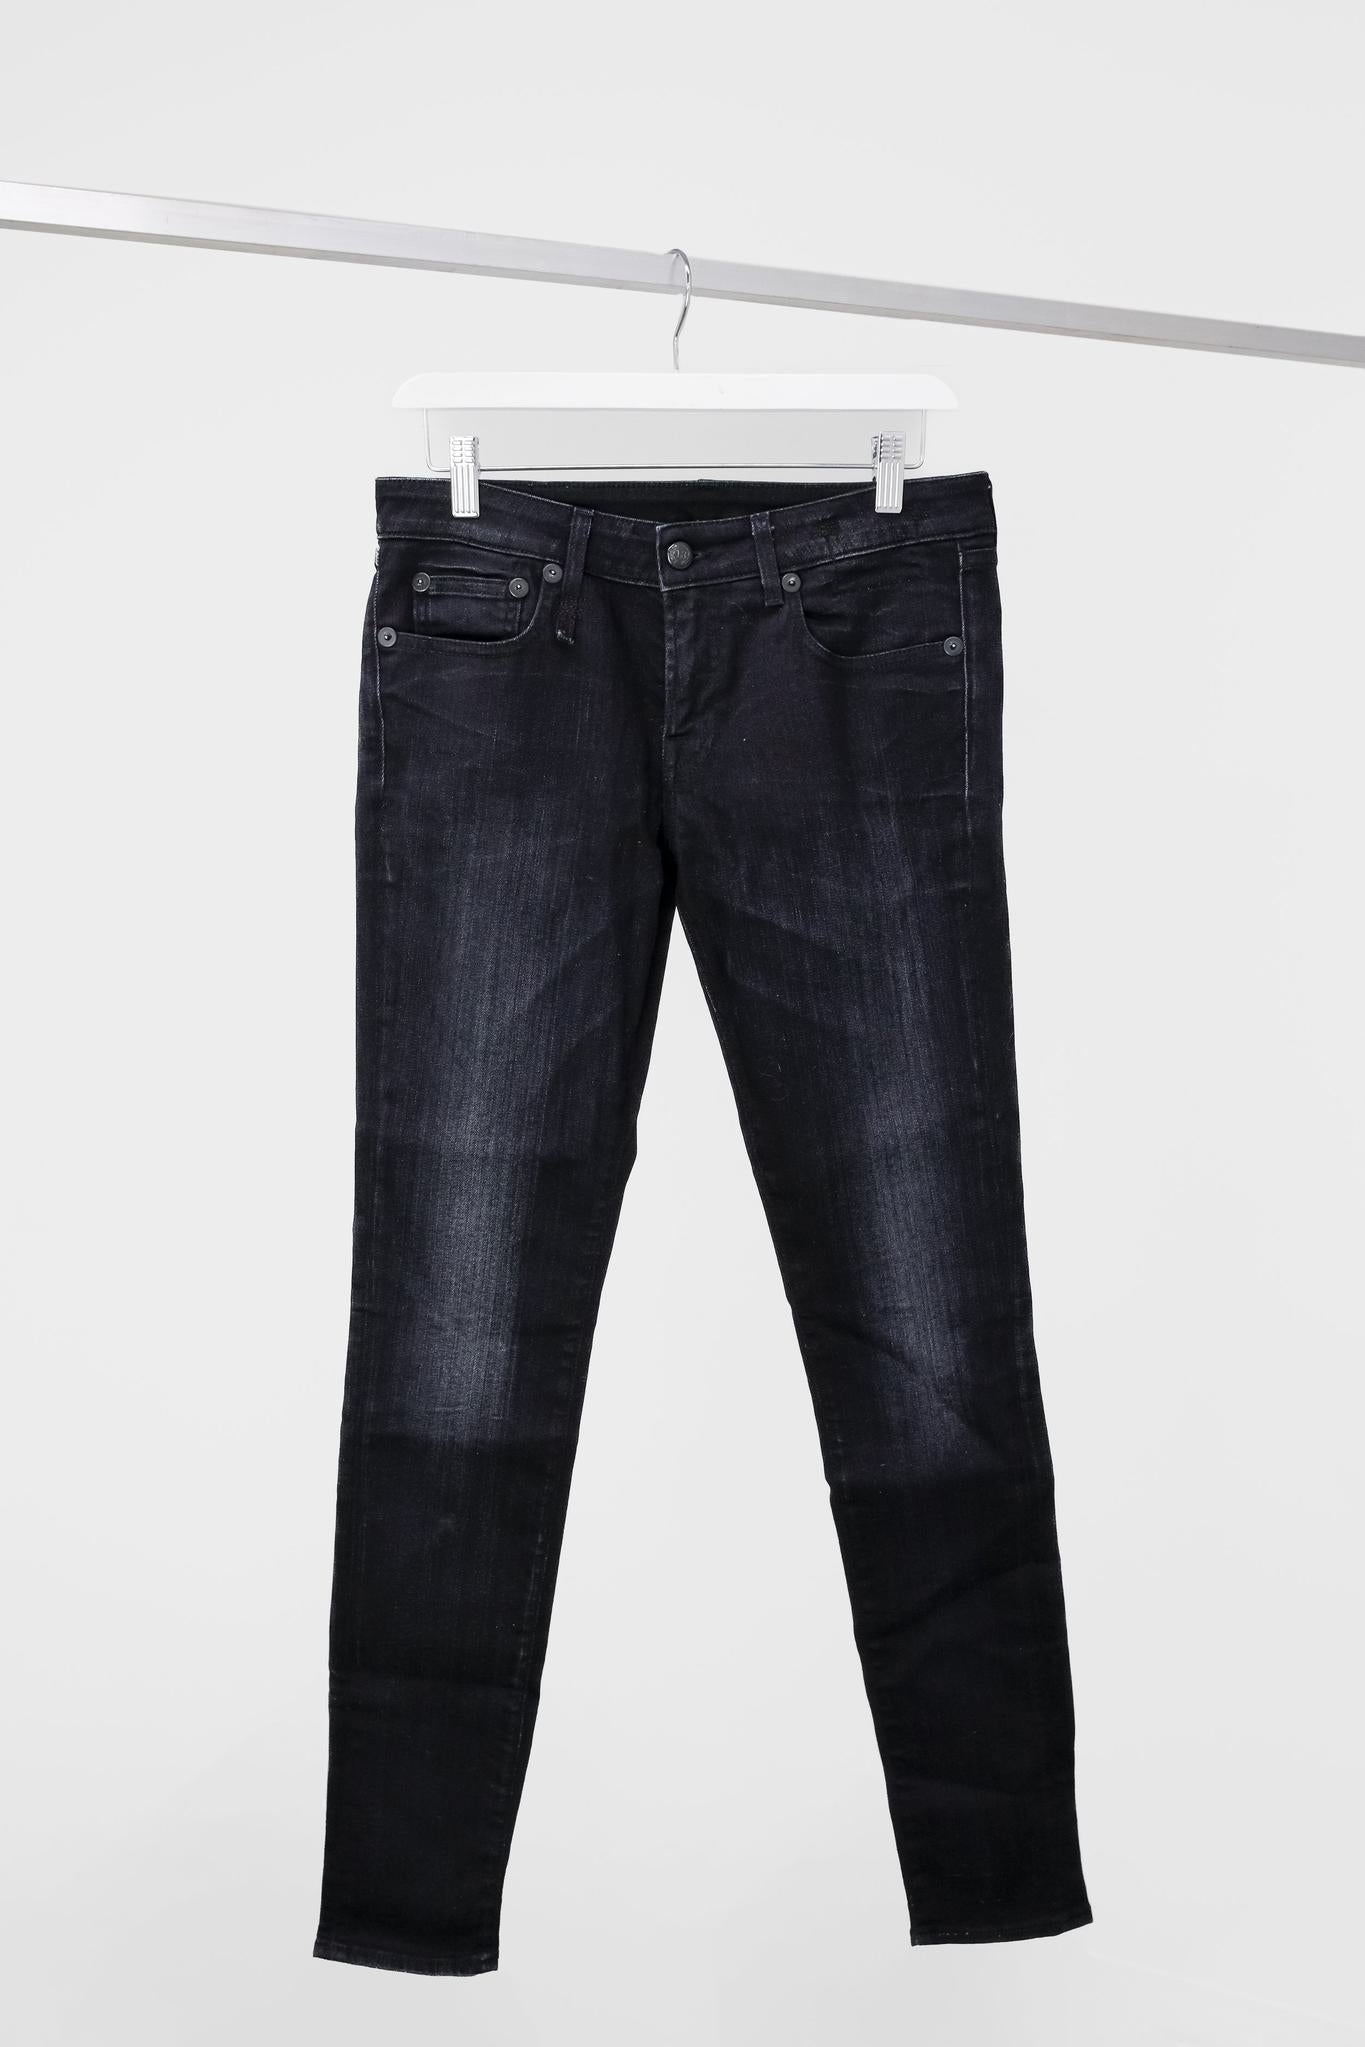 R13 Faded Black Skinny Jeans